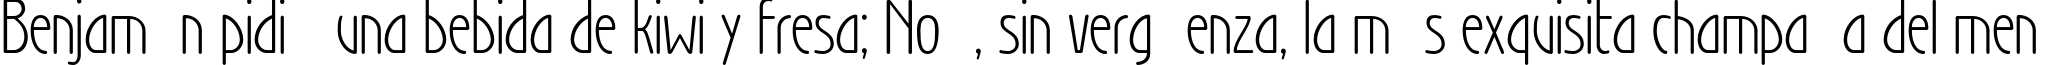 Пример написания шрифтом WienLight текста на испанском